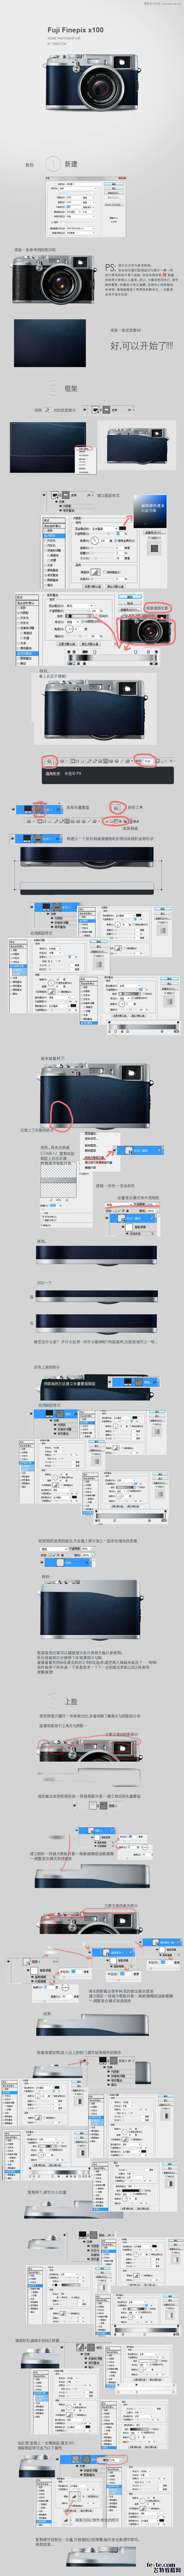 Photoshop鼠标逼真的写实Fuji相机图标,PS教程,素材中国网